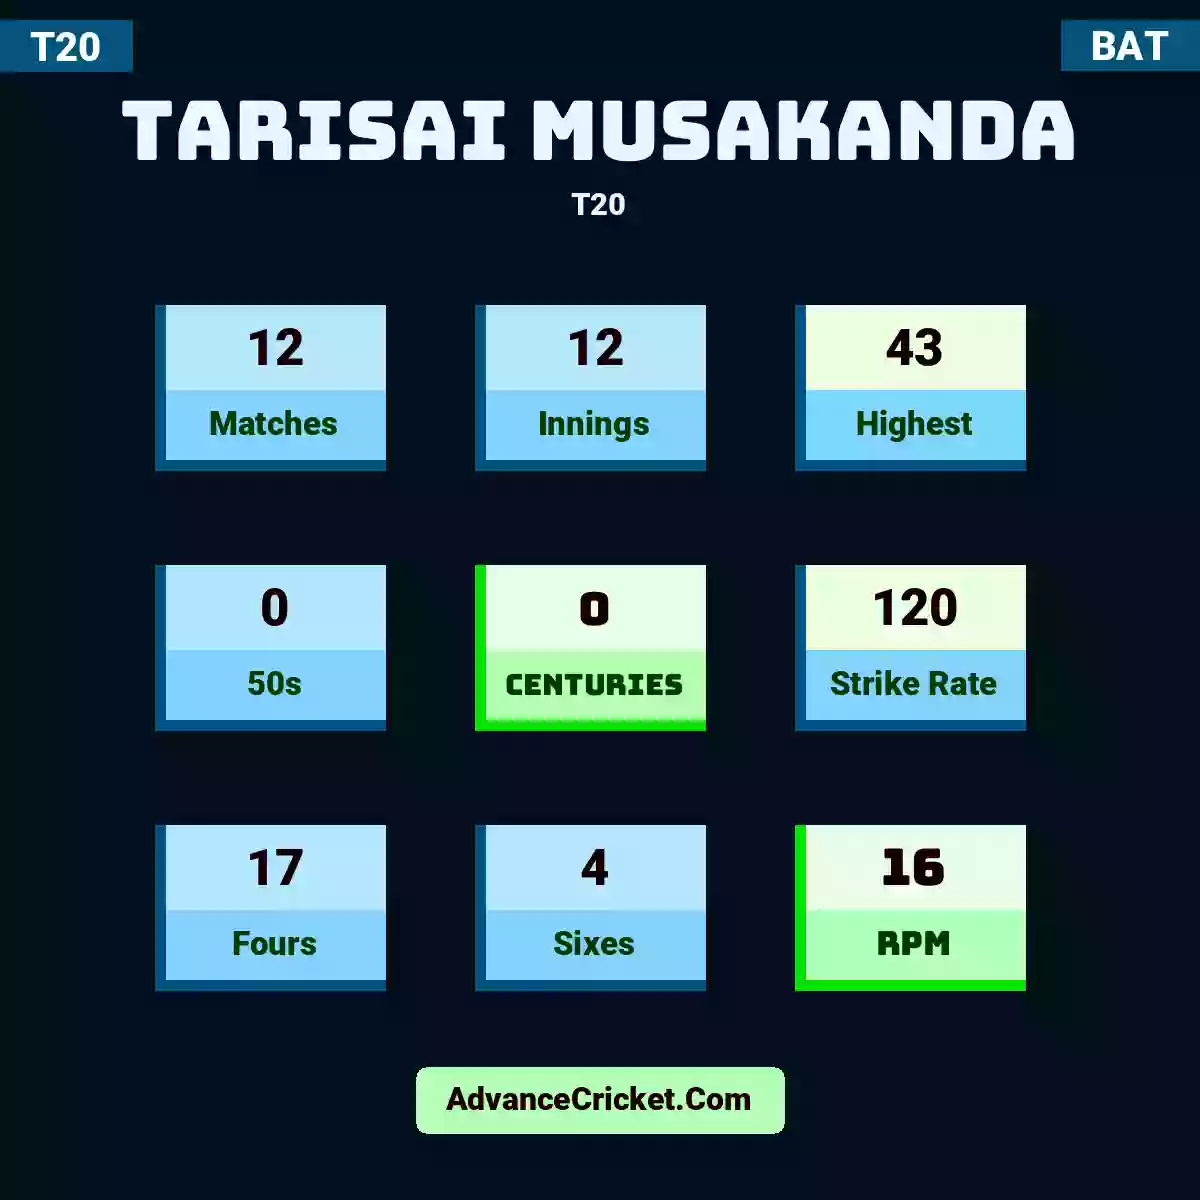 Tarisai Musakanda T20 , Tarisai Musakanda played 12 matches, scored 43 runs as highest, 0 half-centuries, and 0 centuries, with a strike rate of 120. T.Musakanda hit 17 fours and 4 sixes, with an RPM of 16.